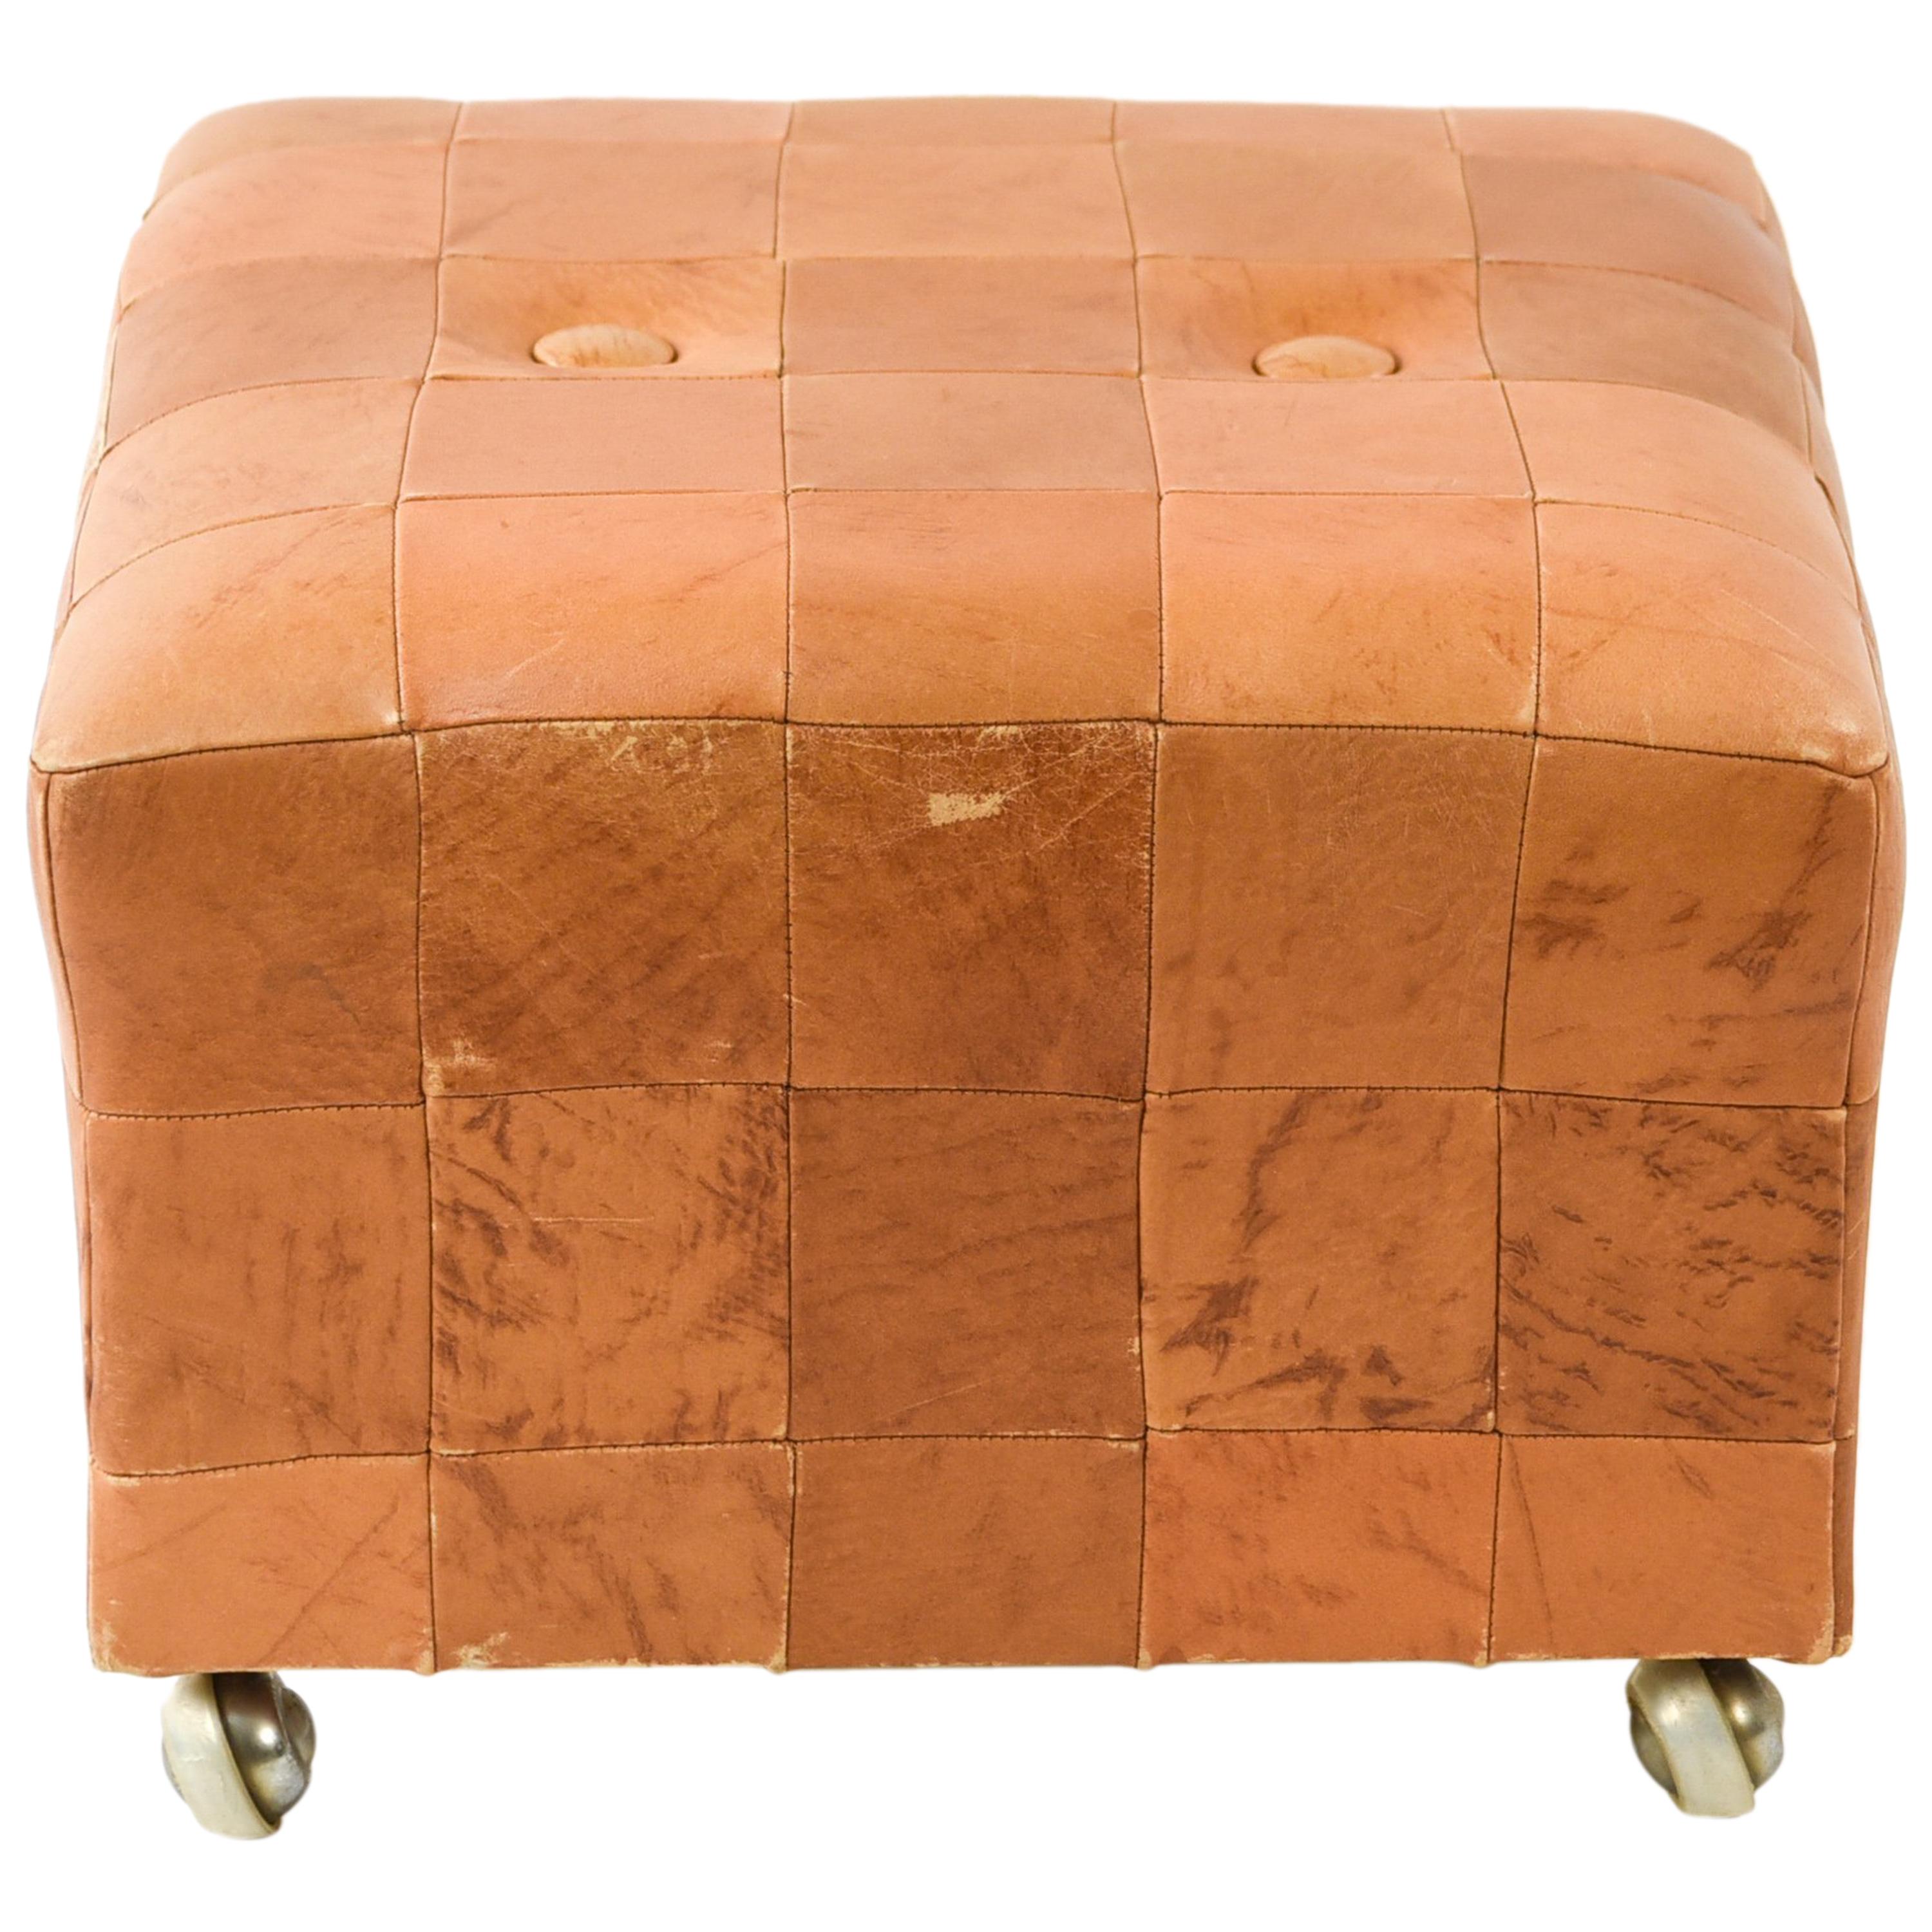 Midcentury Danish Leather Cube Ottoman